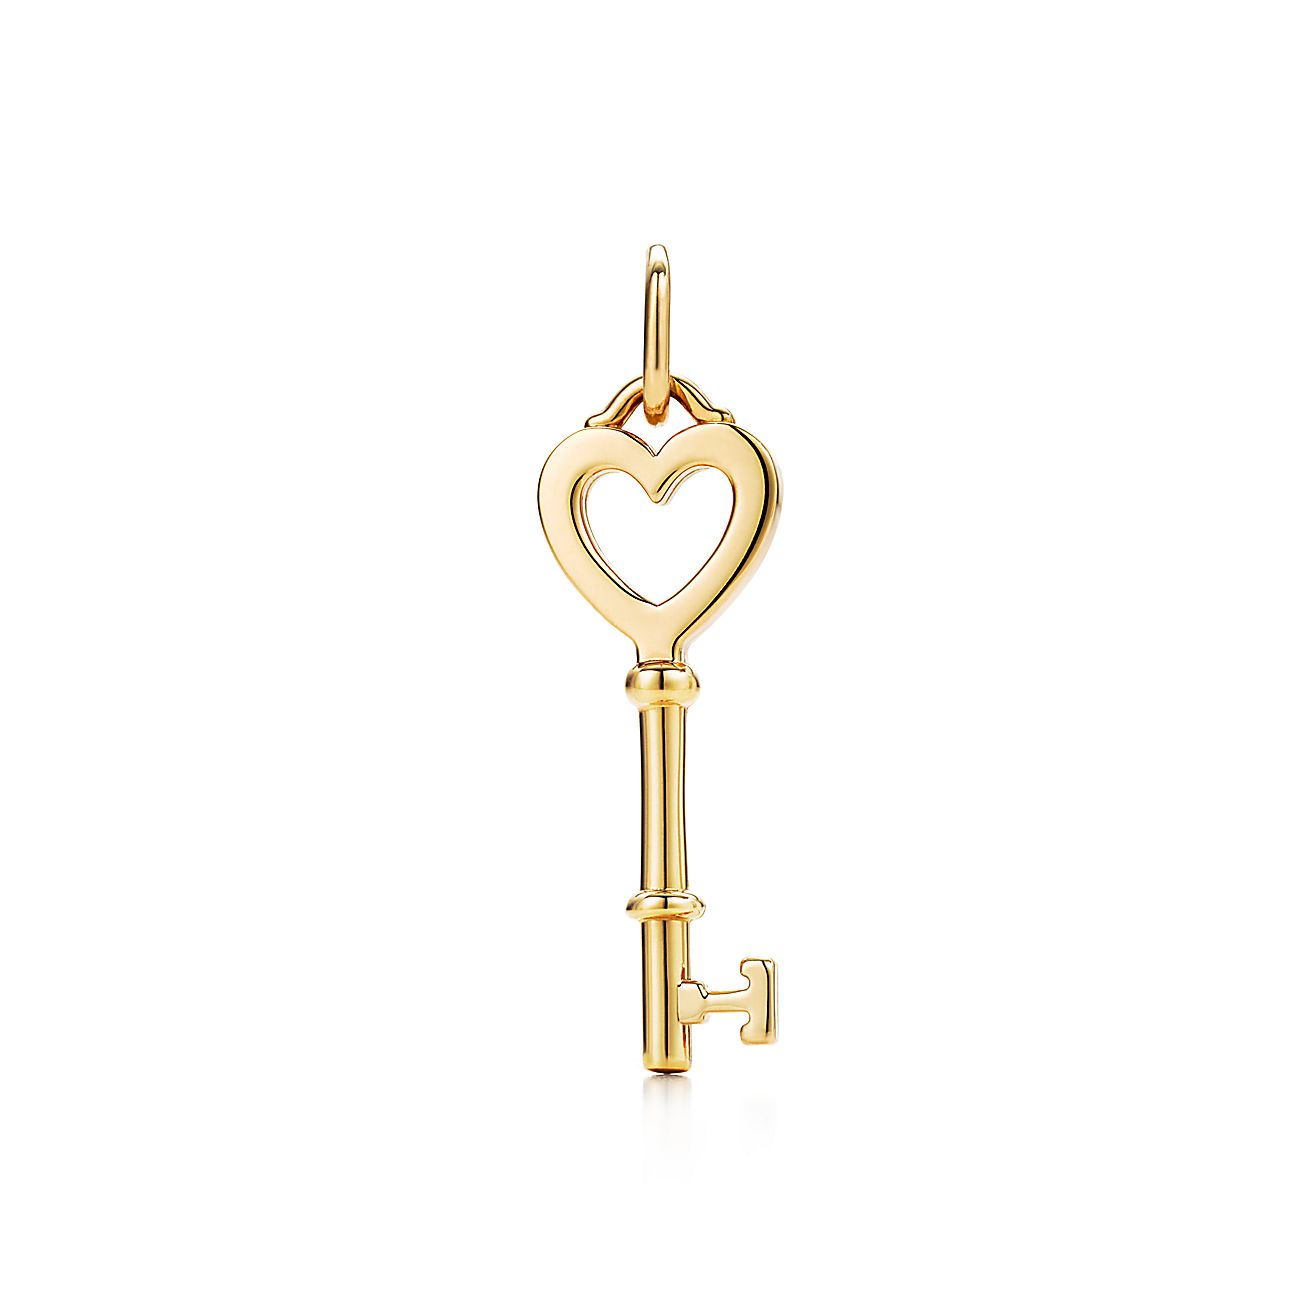 Tiffany Keys heart key pendant in 18k gold. | Tiffany & Co.